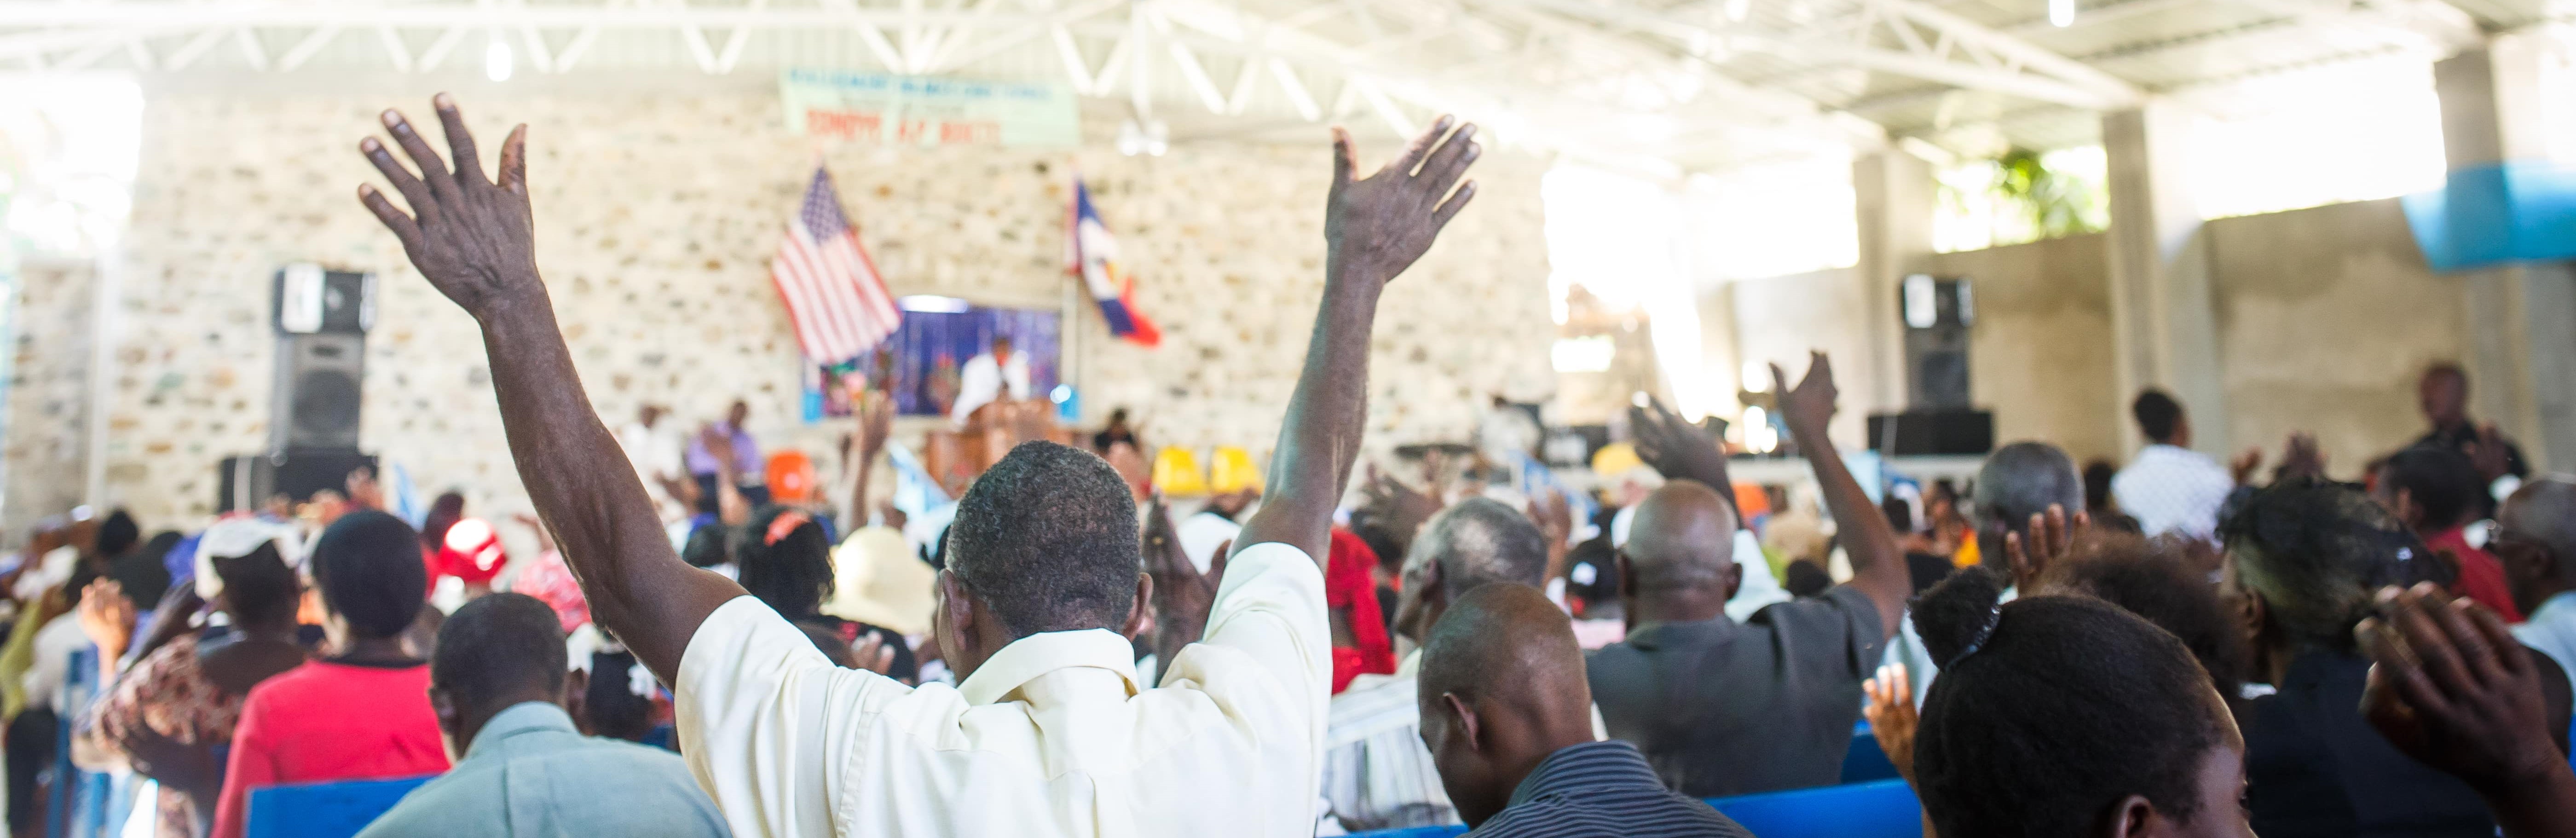 praying in church in Haiti